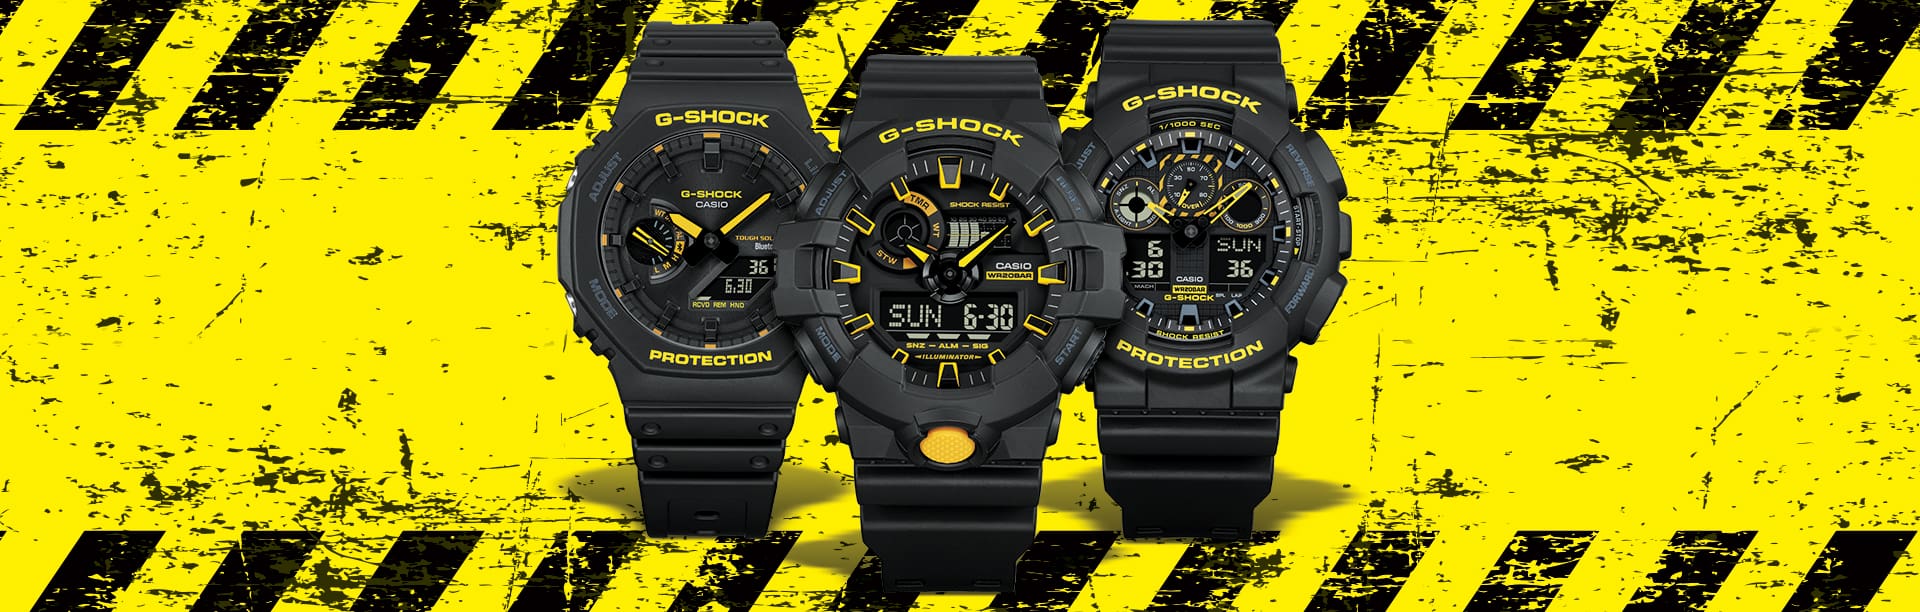 G-SHOCK GWB5600CY-1, GAB2100CY-1A, GA100CY-1A, and GA700CY-1A on a yellow background